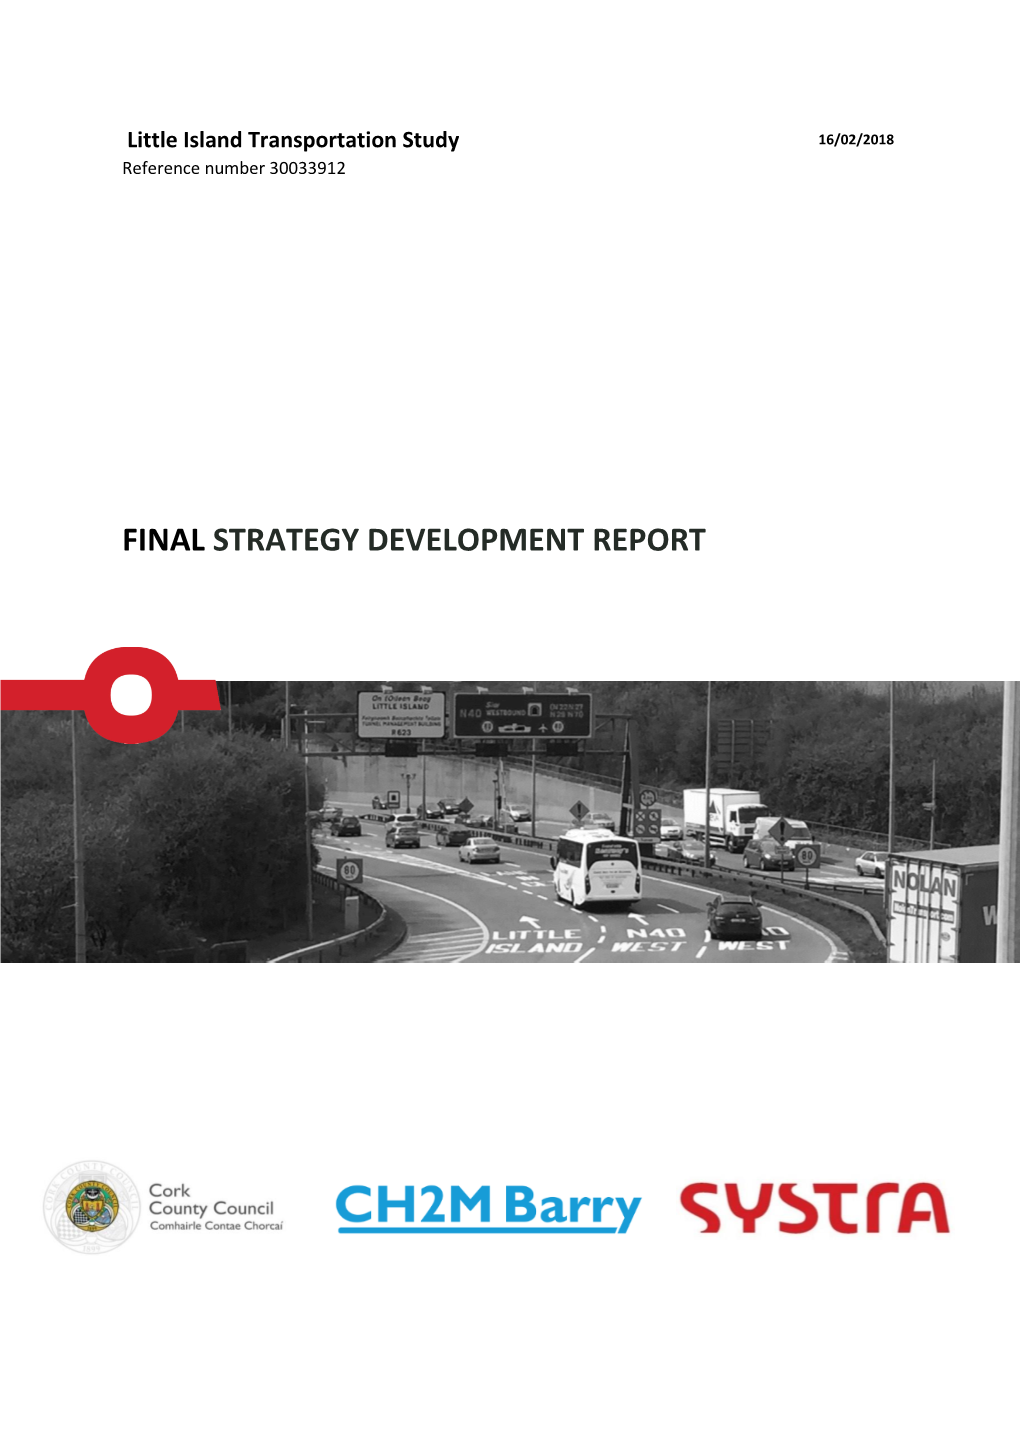 Final Strategy Development Report